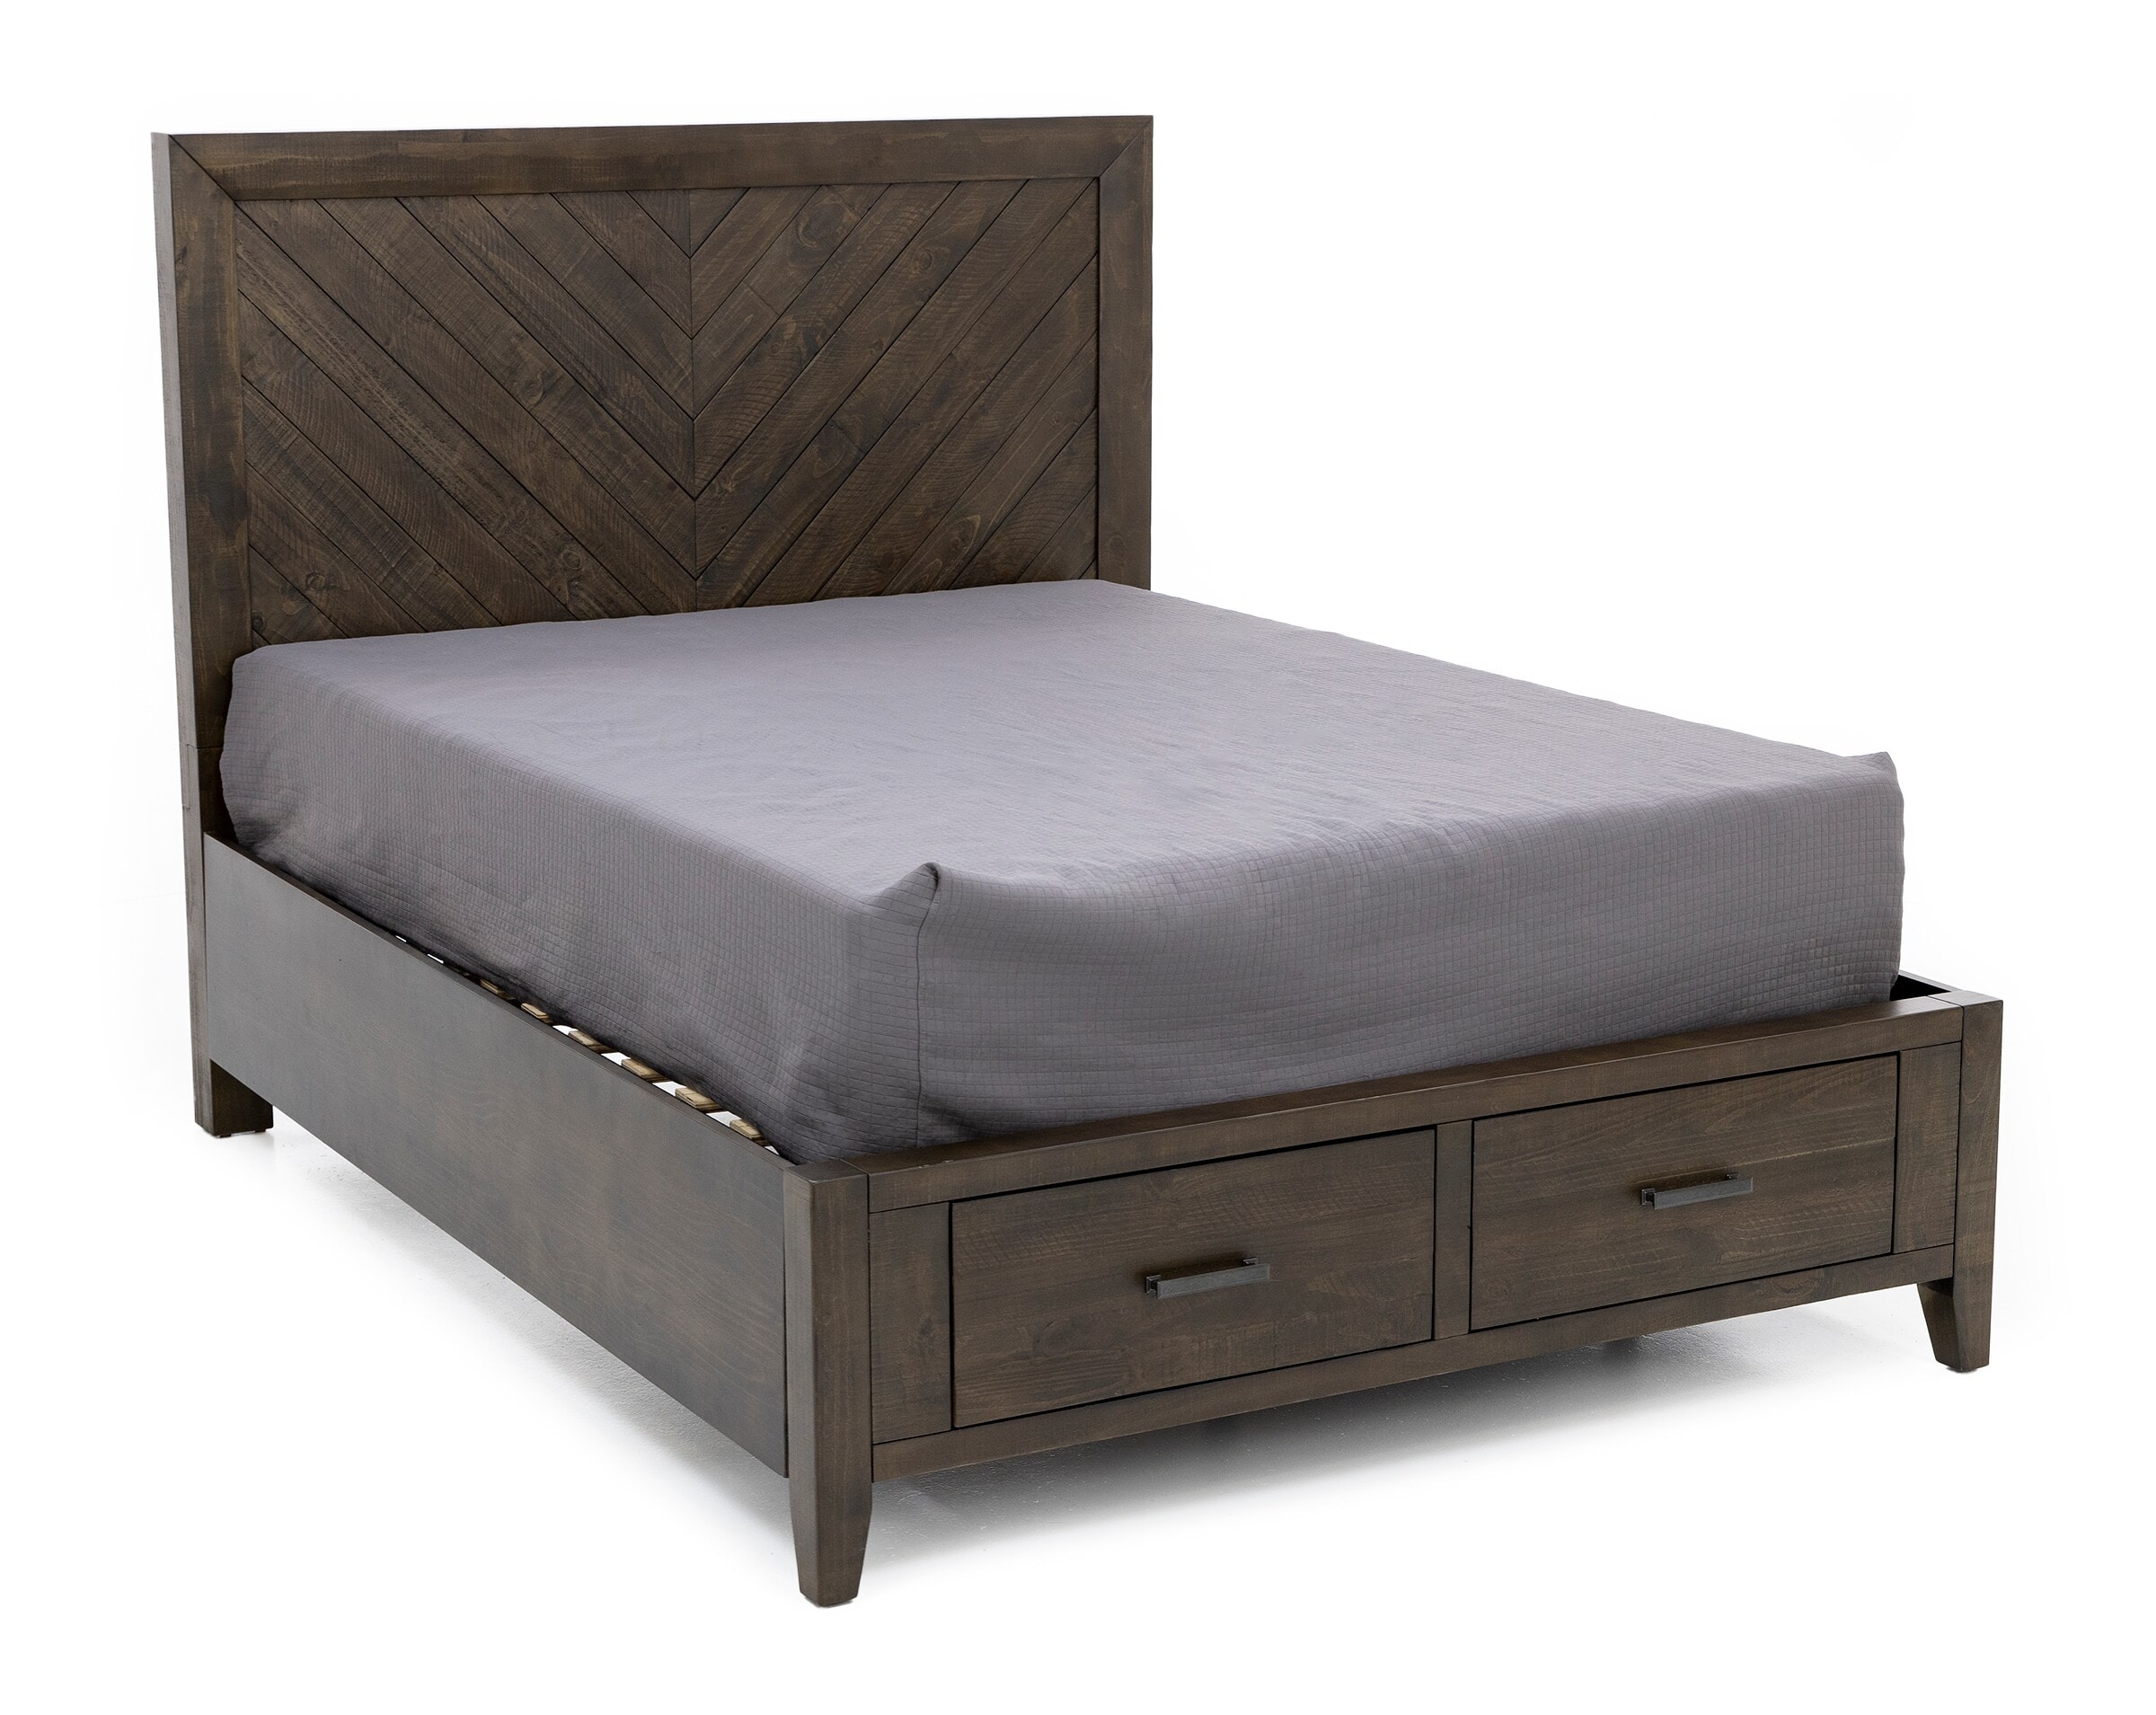 Direct Design Aria Full Footboard Storage Bed